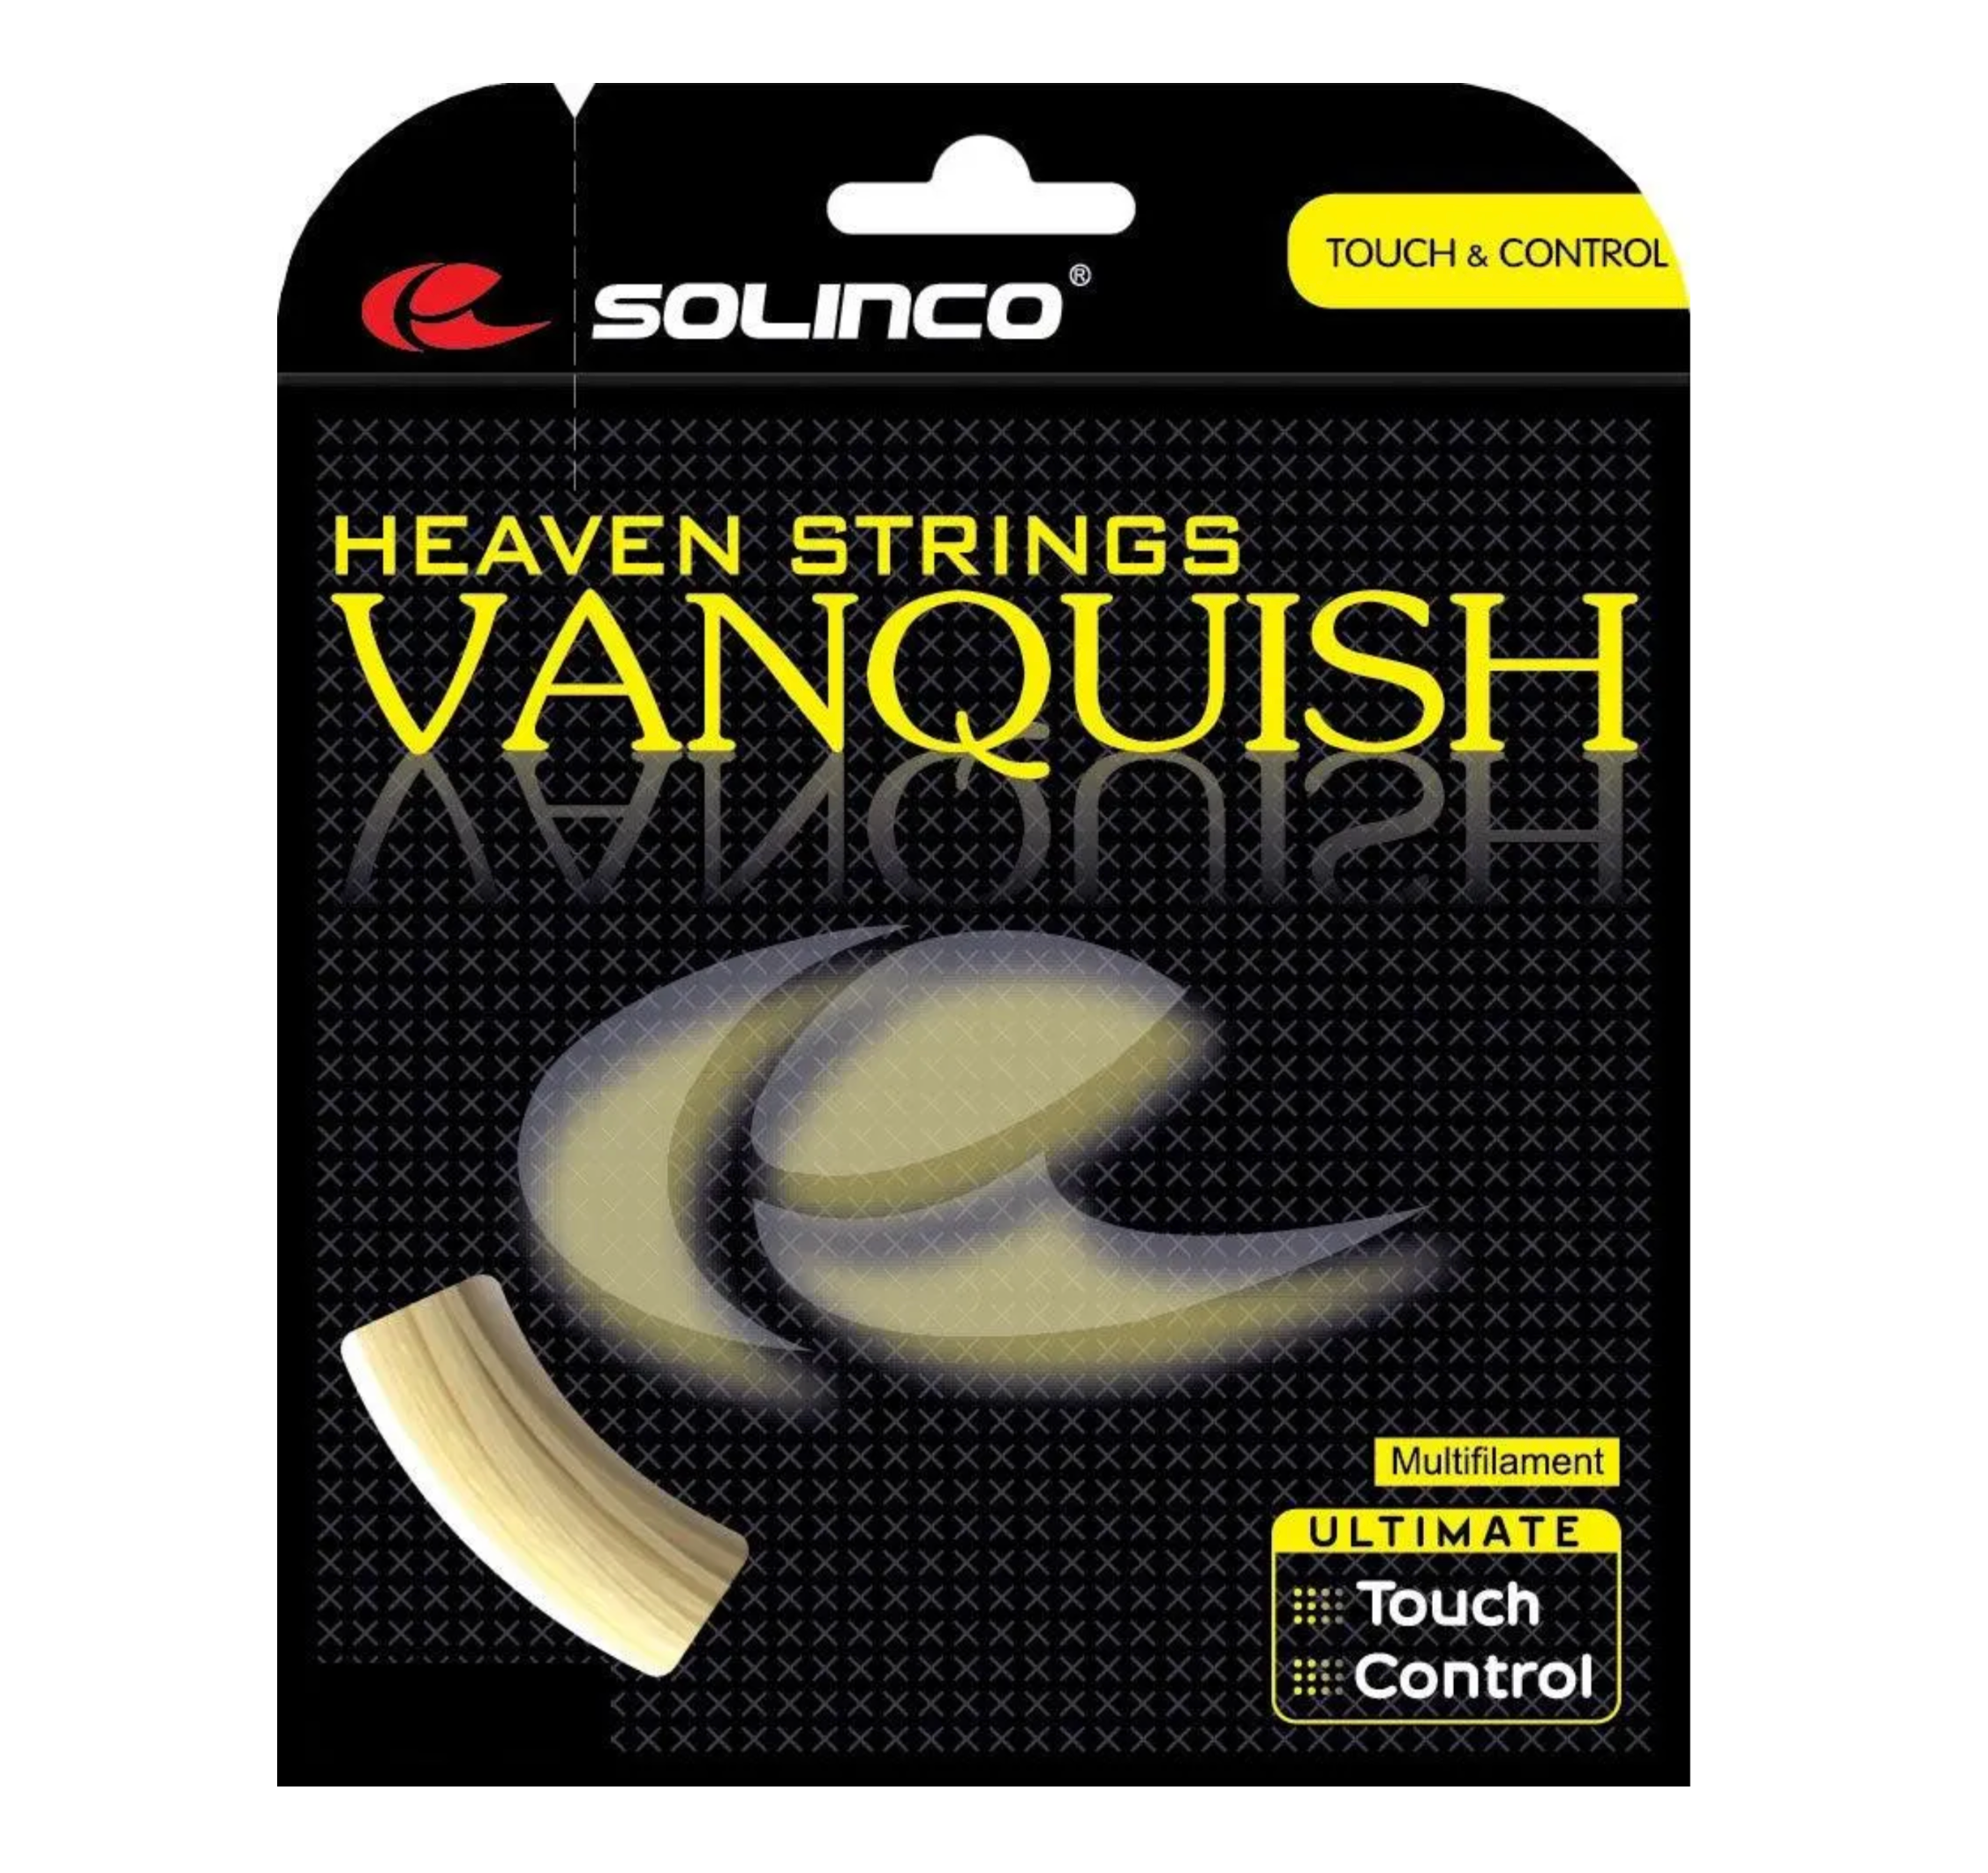 Original packaging of Solinco Vanquish 17 Tennis String